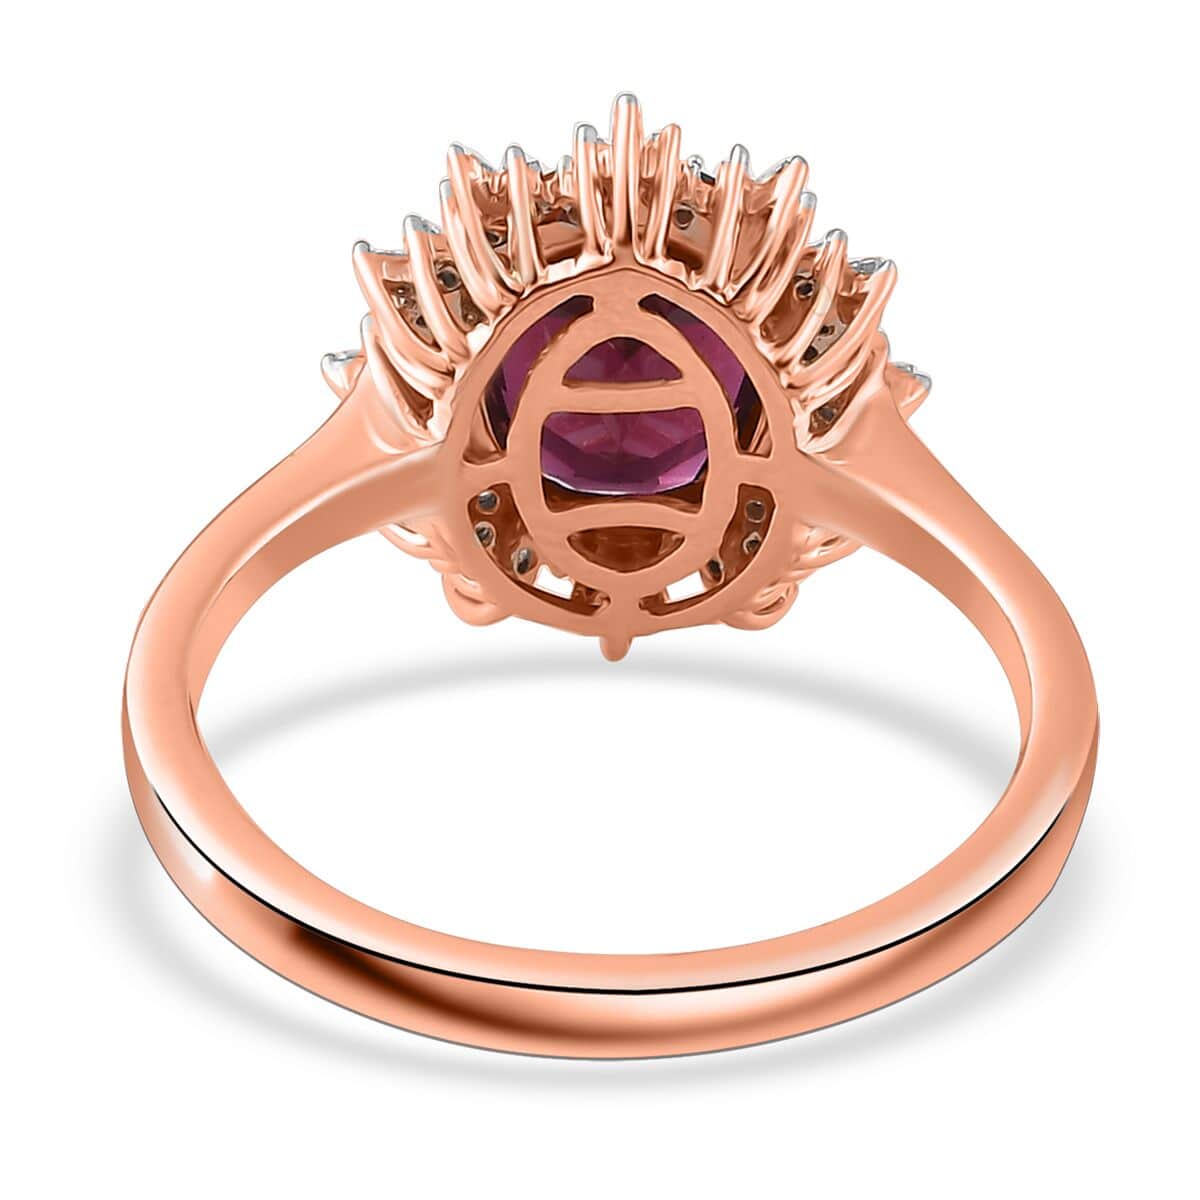 Luxoro 10K Rose Gold Premium Orissa Rhodolite Garnet and G-H I2 Diamond Ring (Size 10.0) 3.40 ctw (Del. in 10-12 Days) image number 4